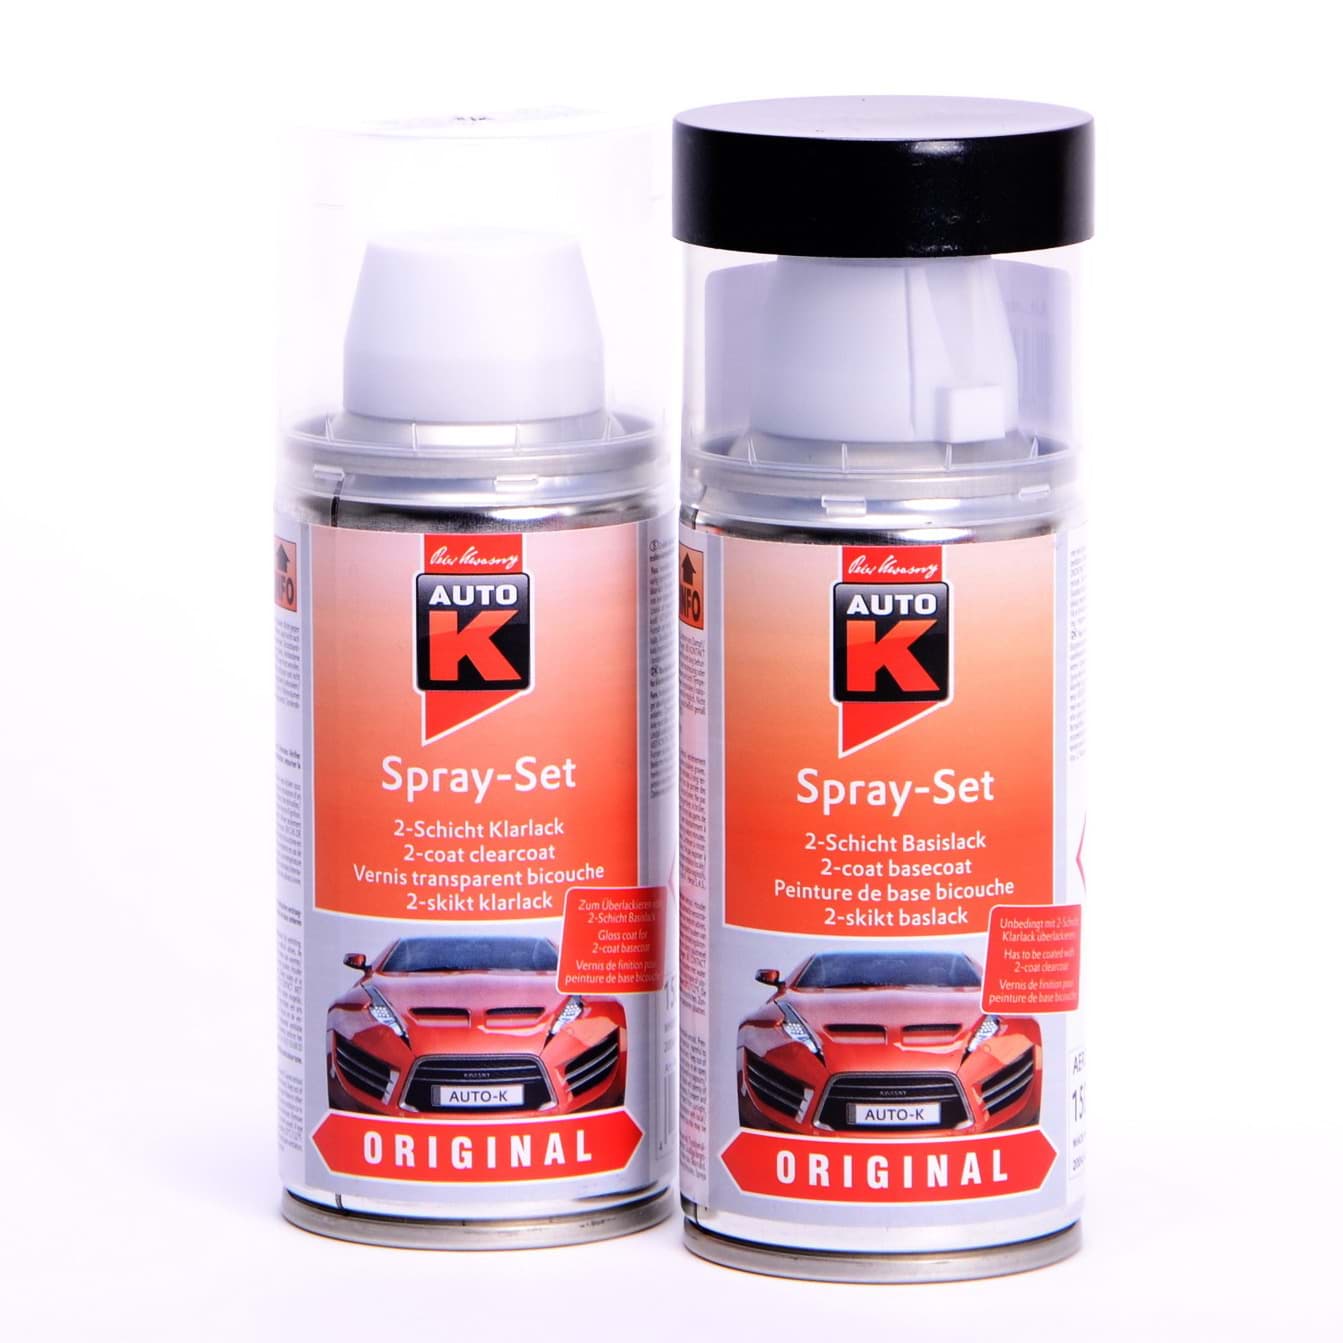 Auto-K Spray-Set Autolack für Opel 361 mintgrün 21395 resmi